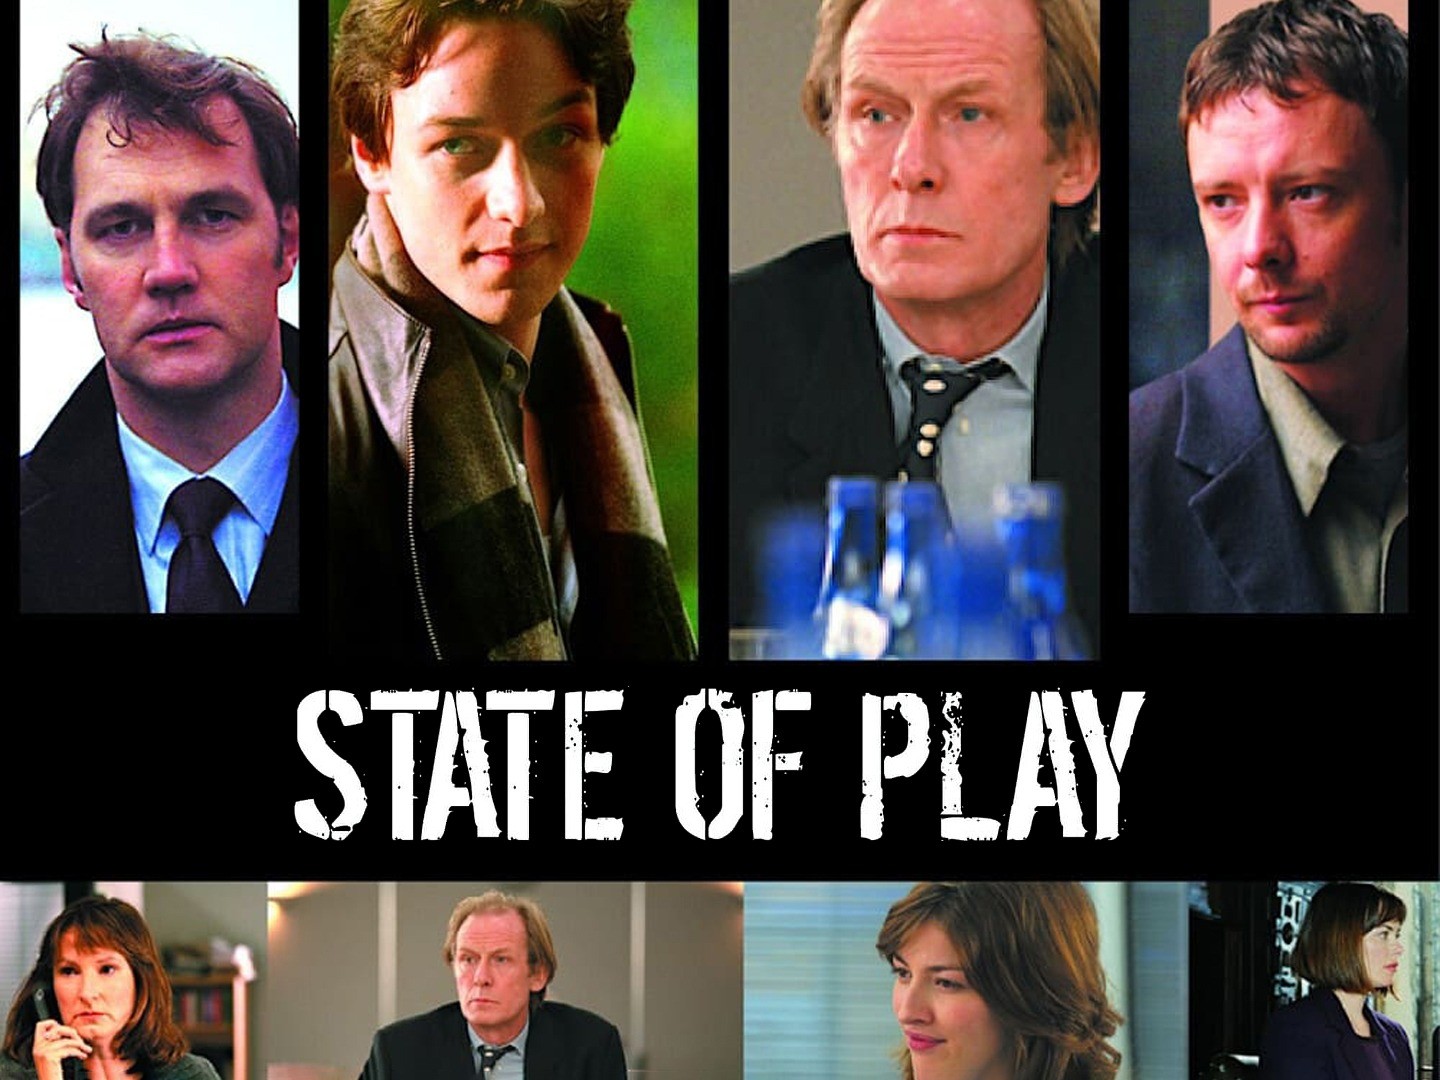 State of Play (TV Mini Series 2003) - IMDb